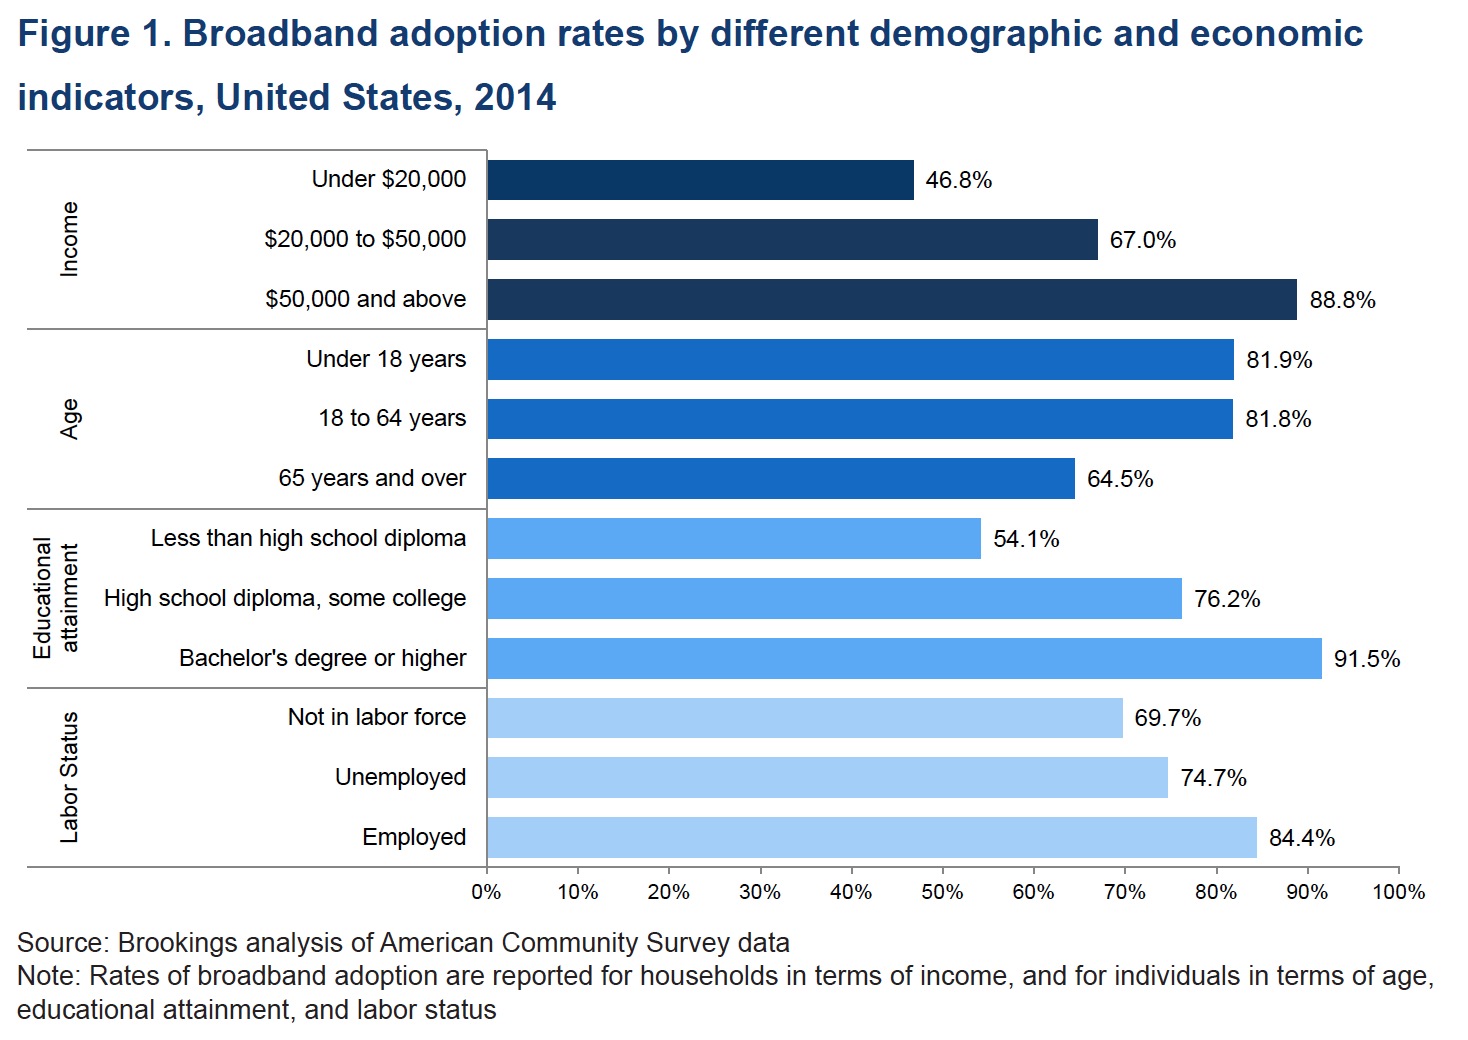 Figure 1. Broadband adoption rates by different demographic and economic indicators, United States, 2014